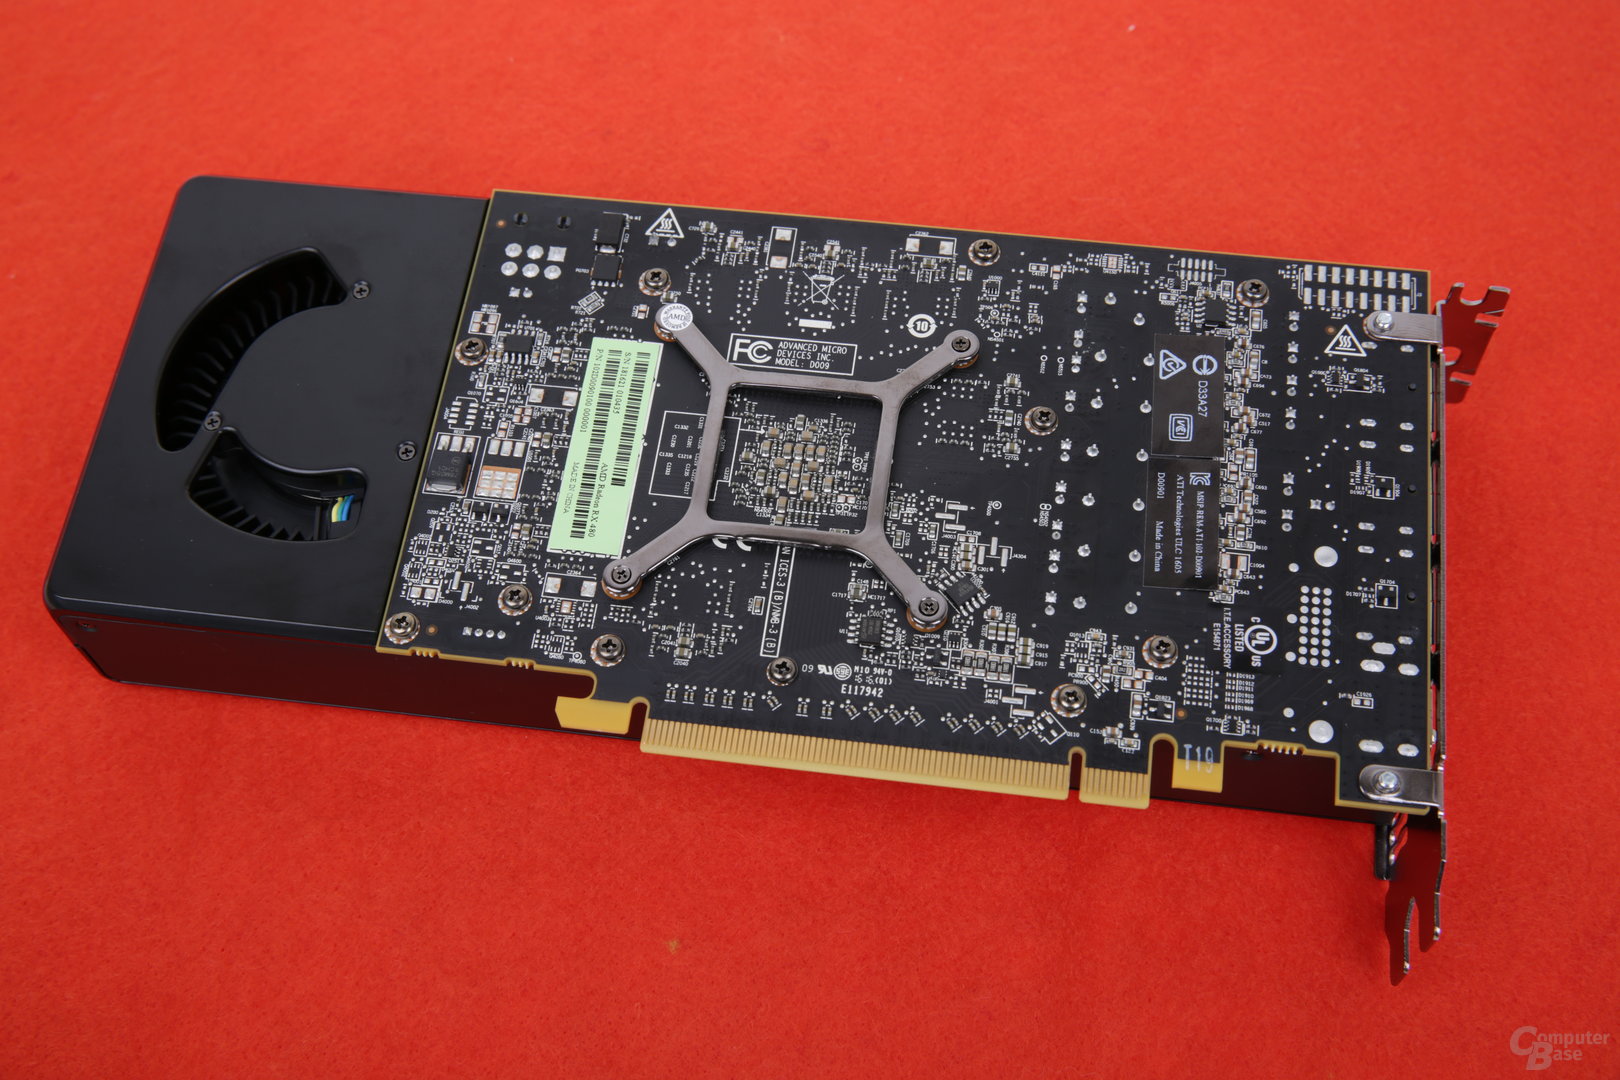 AMD Radeon RX 480